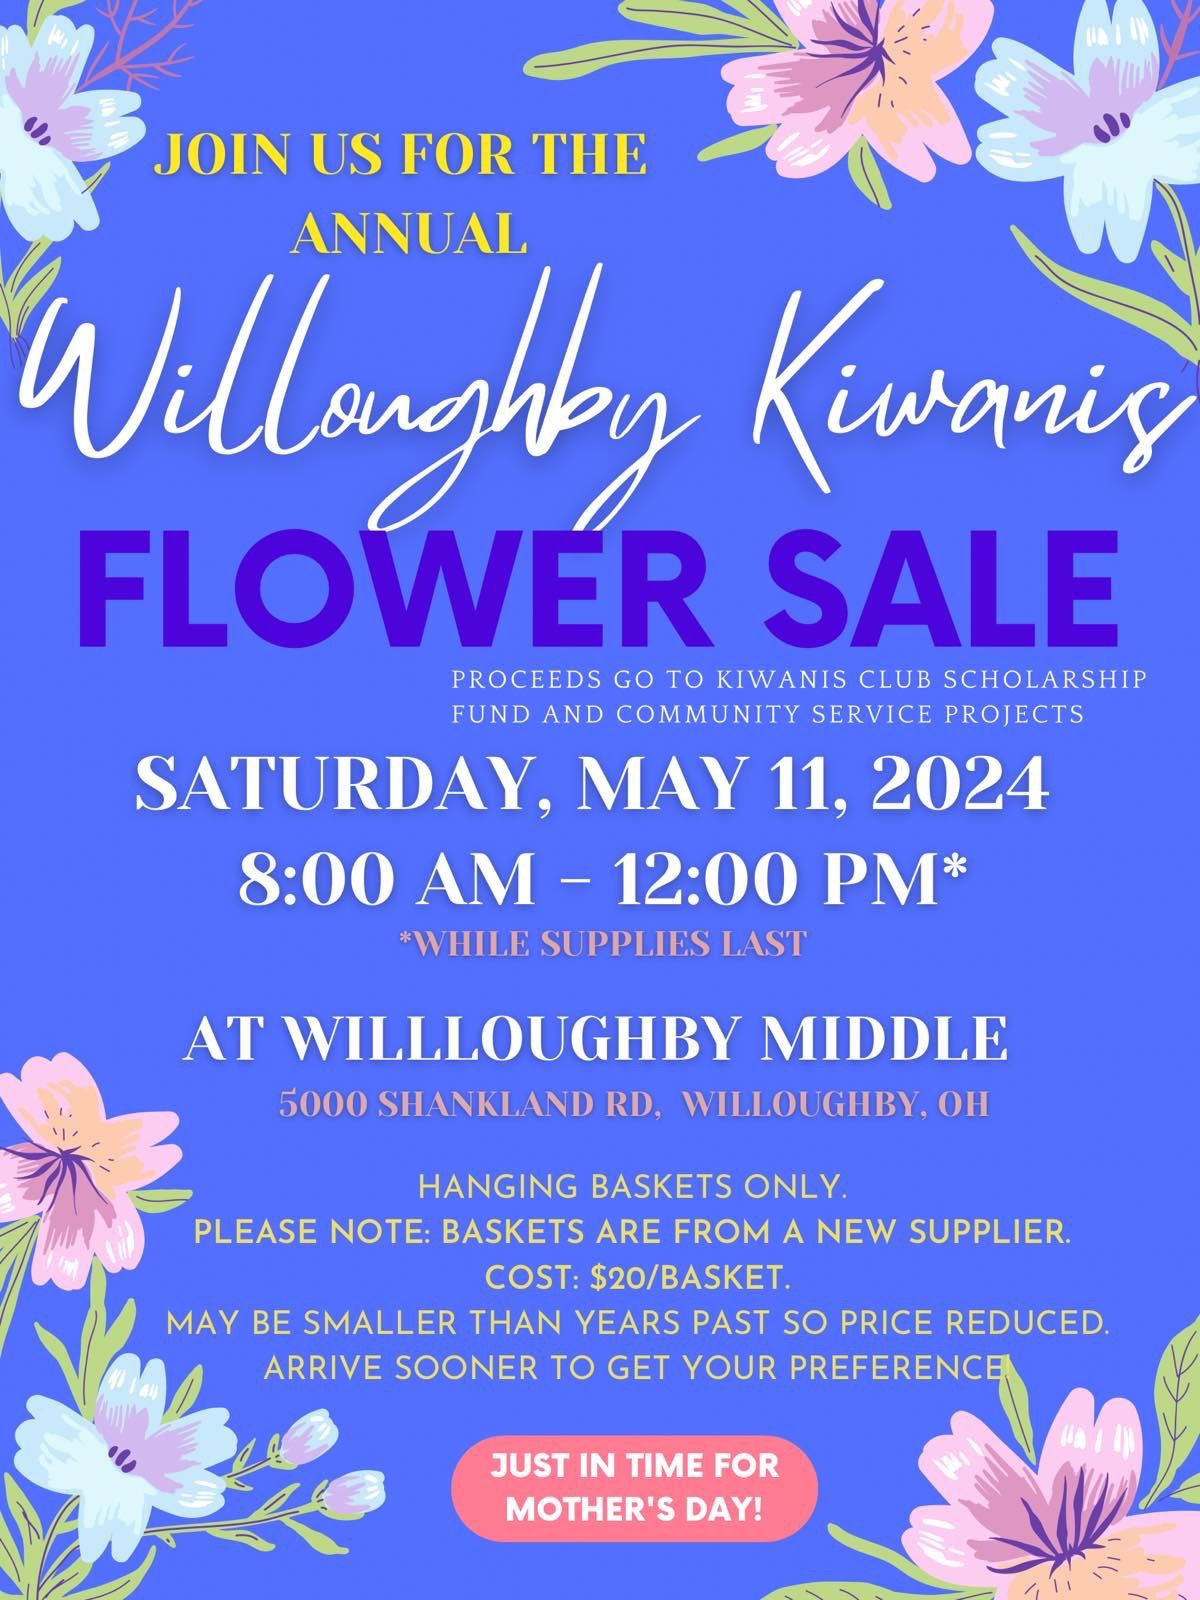 Annual Willoughby Kiwanis Club Flower Sale